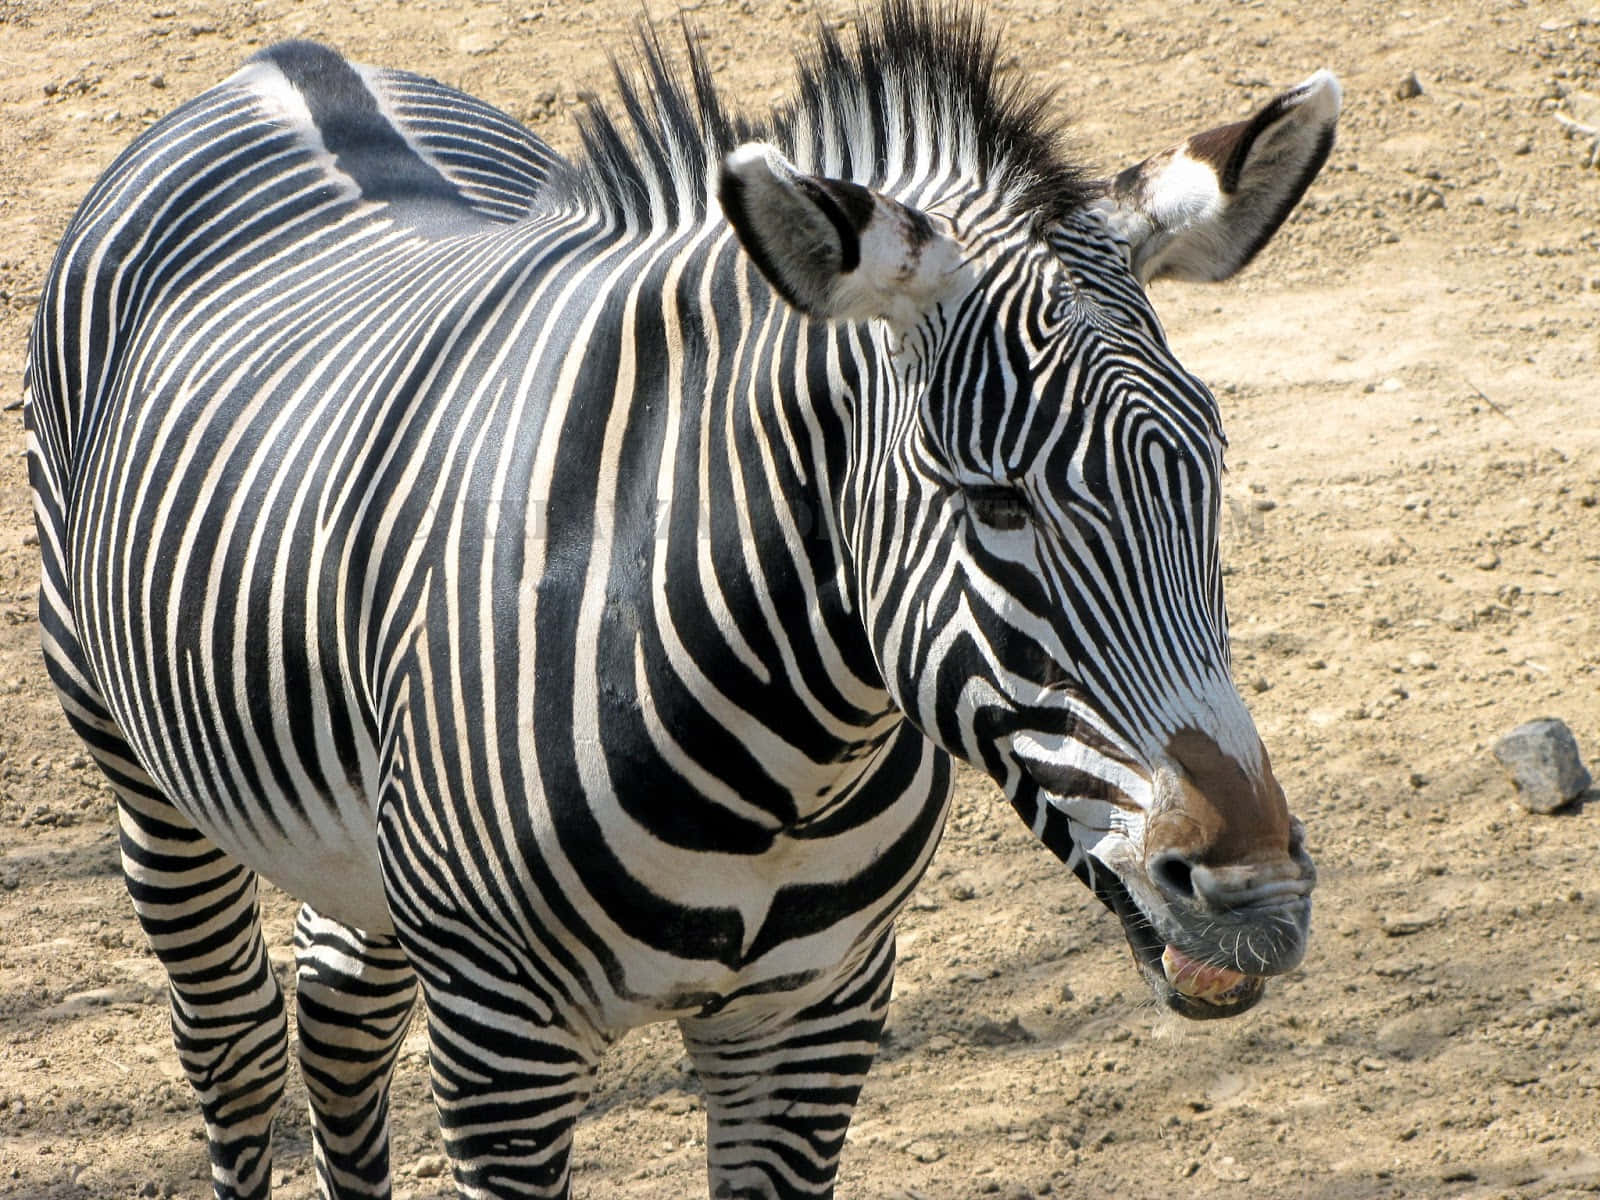 A Proud Zebra Enjoying the African Savanna